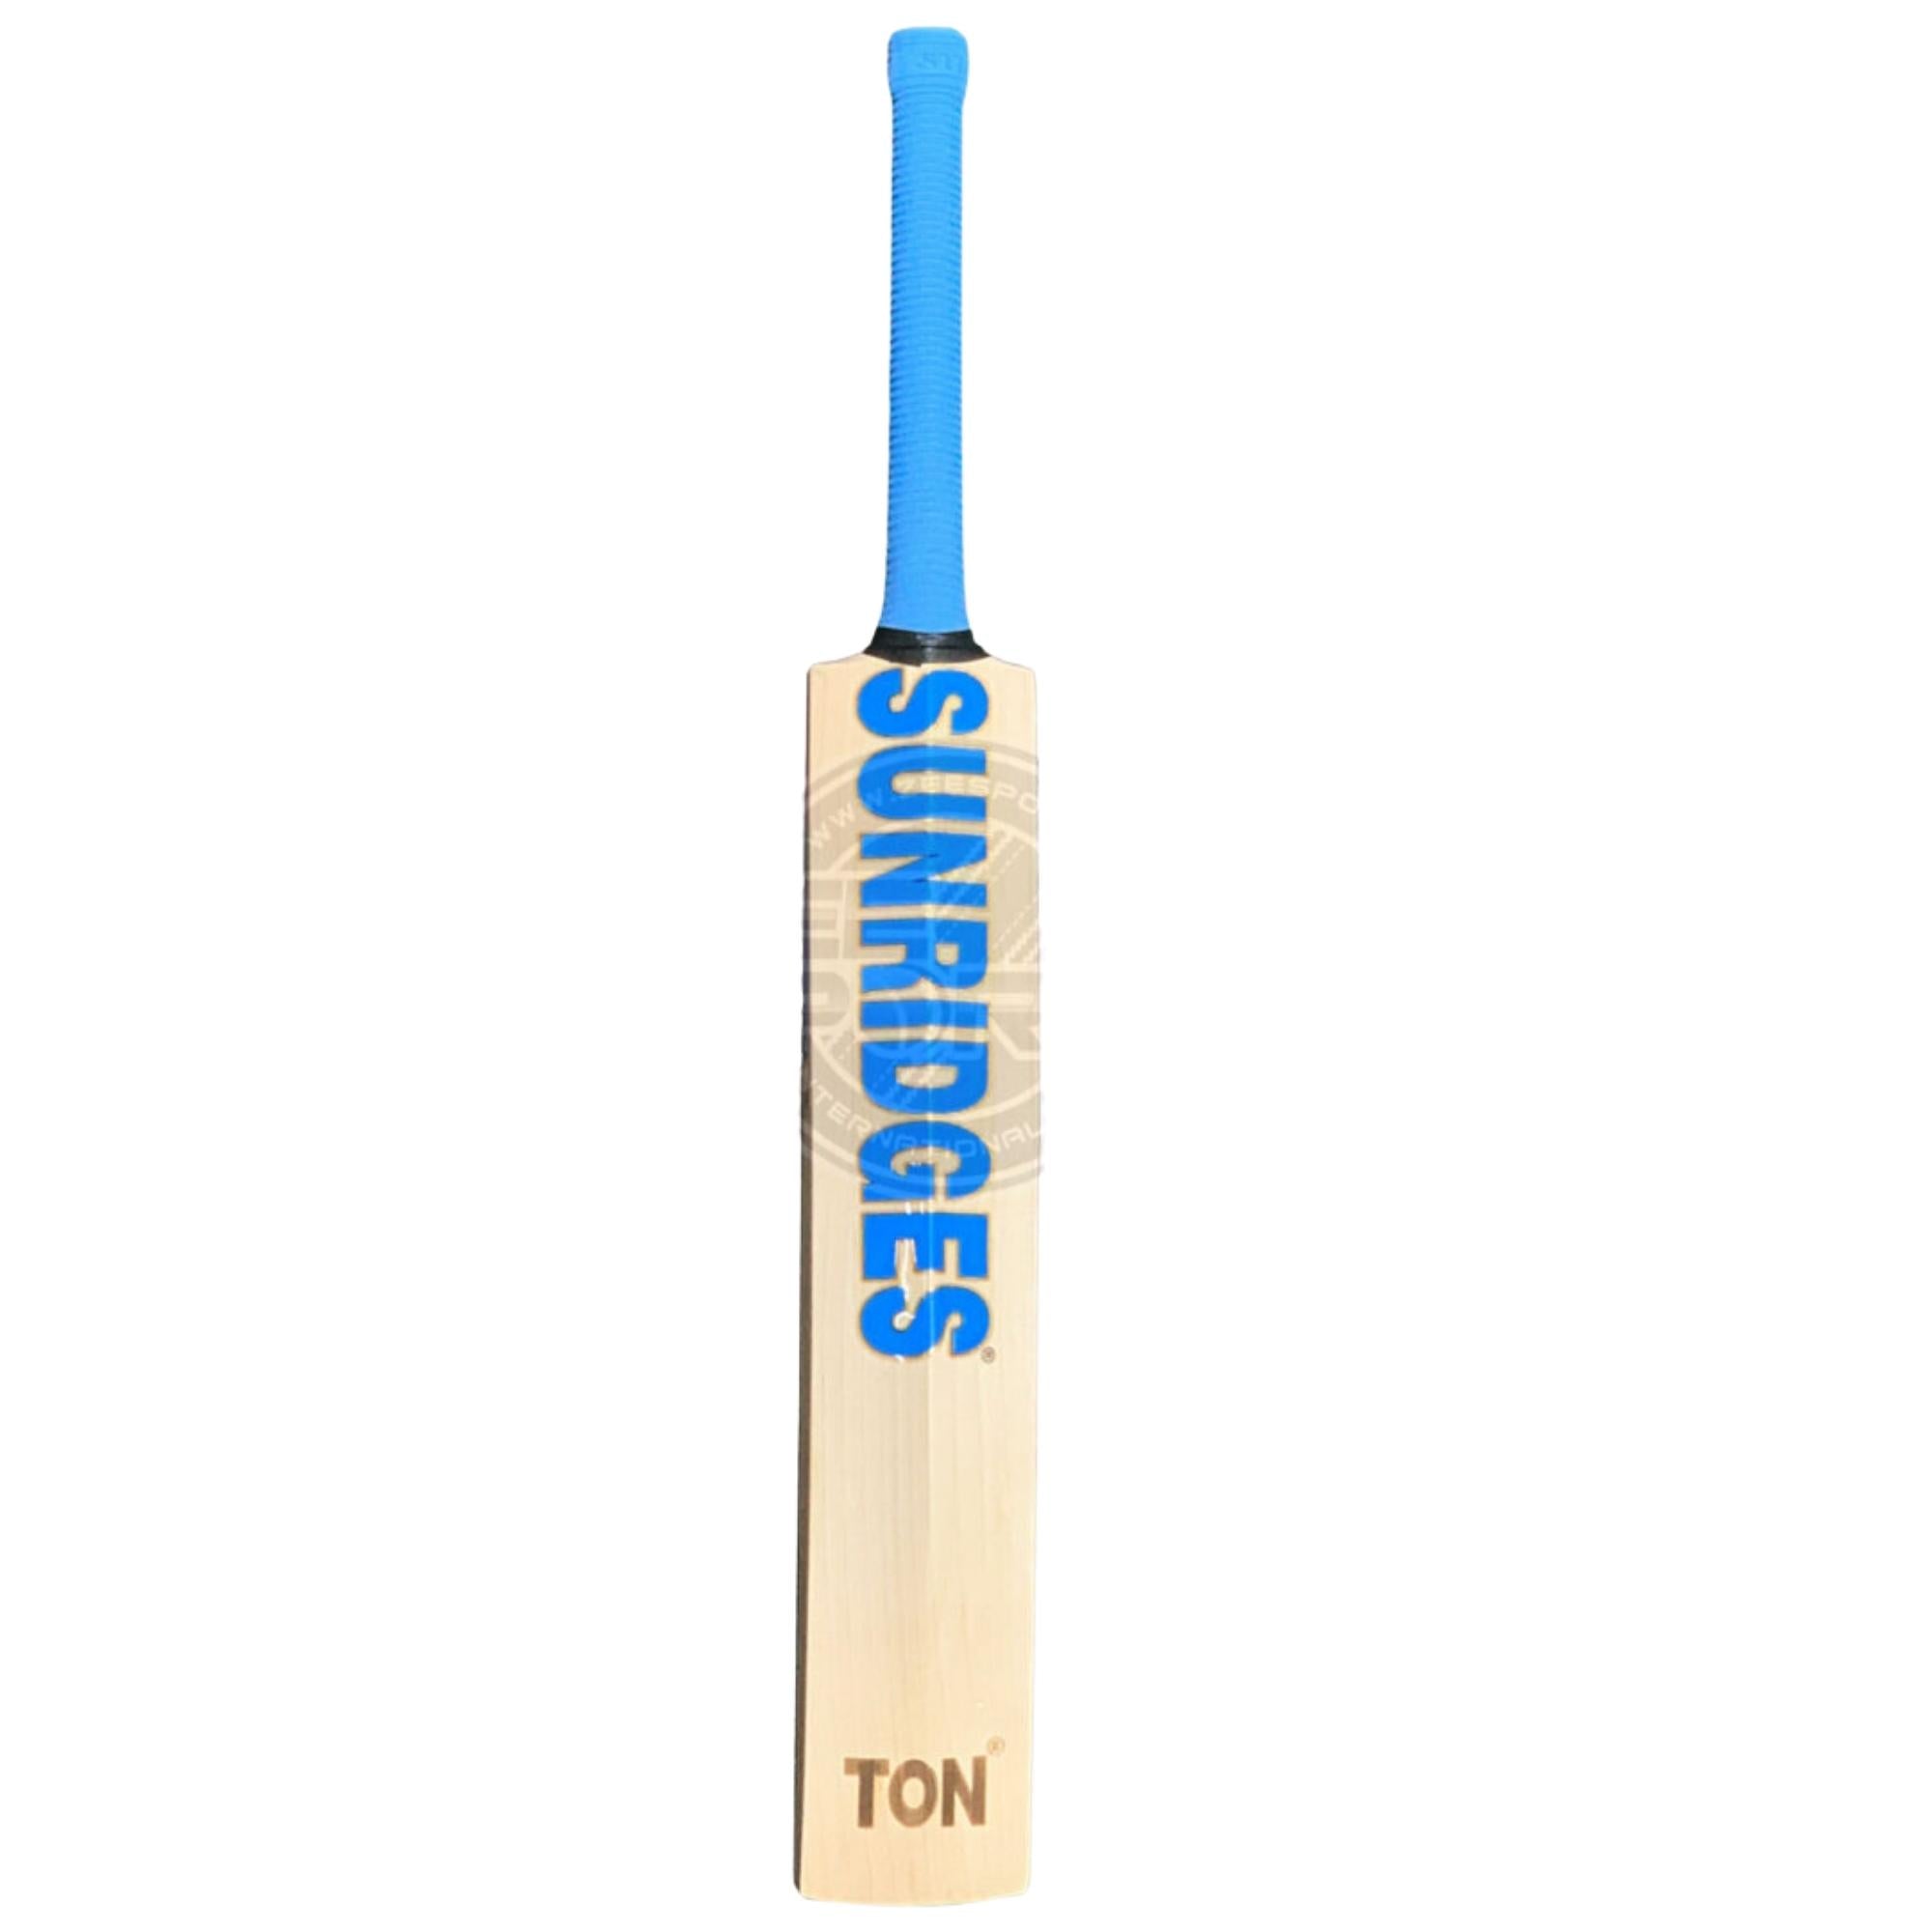 SS Ton Sunridges Royal Retro Classic Cricket Bat